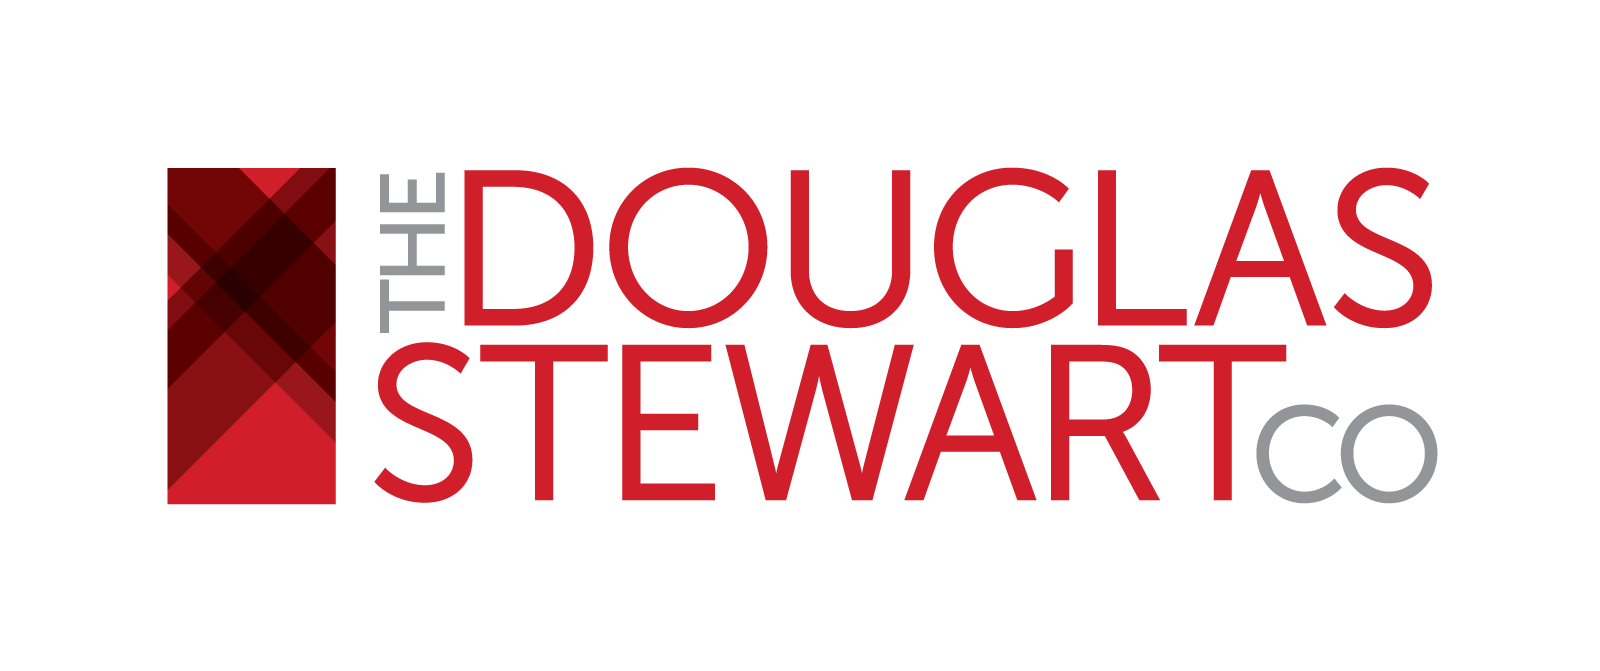 Douglas Stewart Company Company Logo